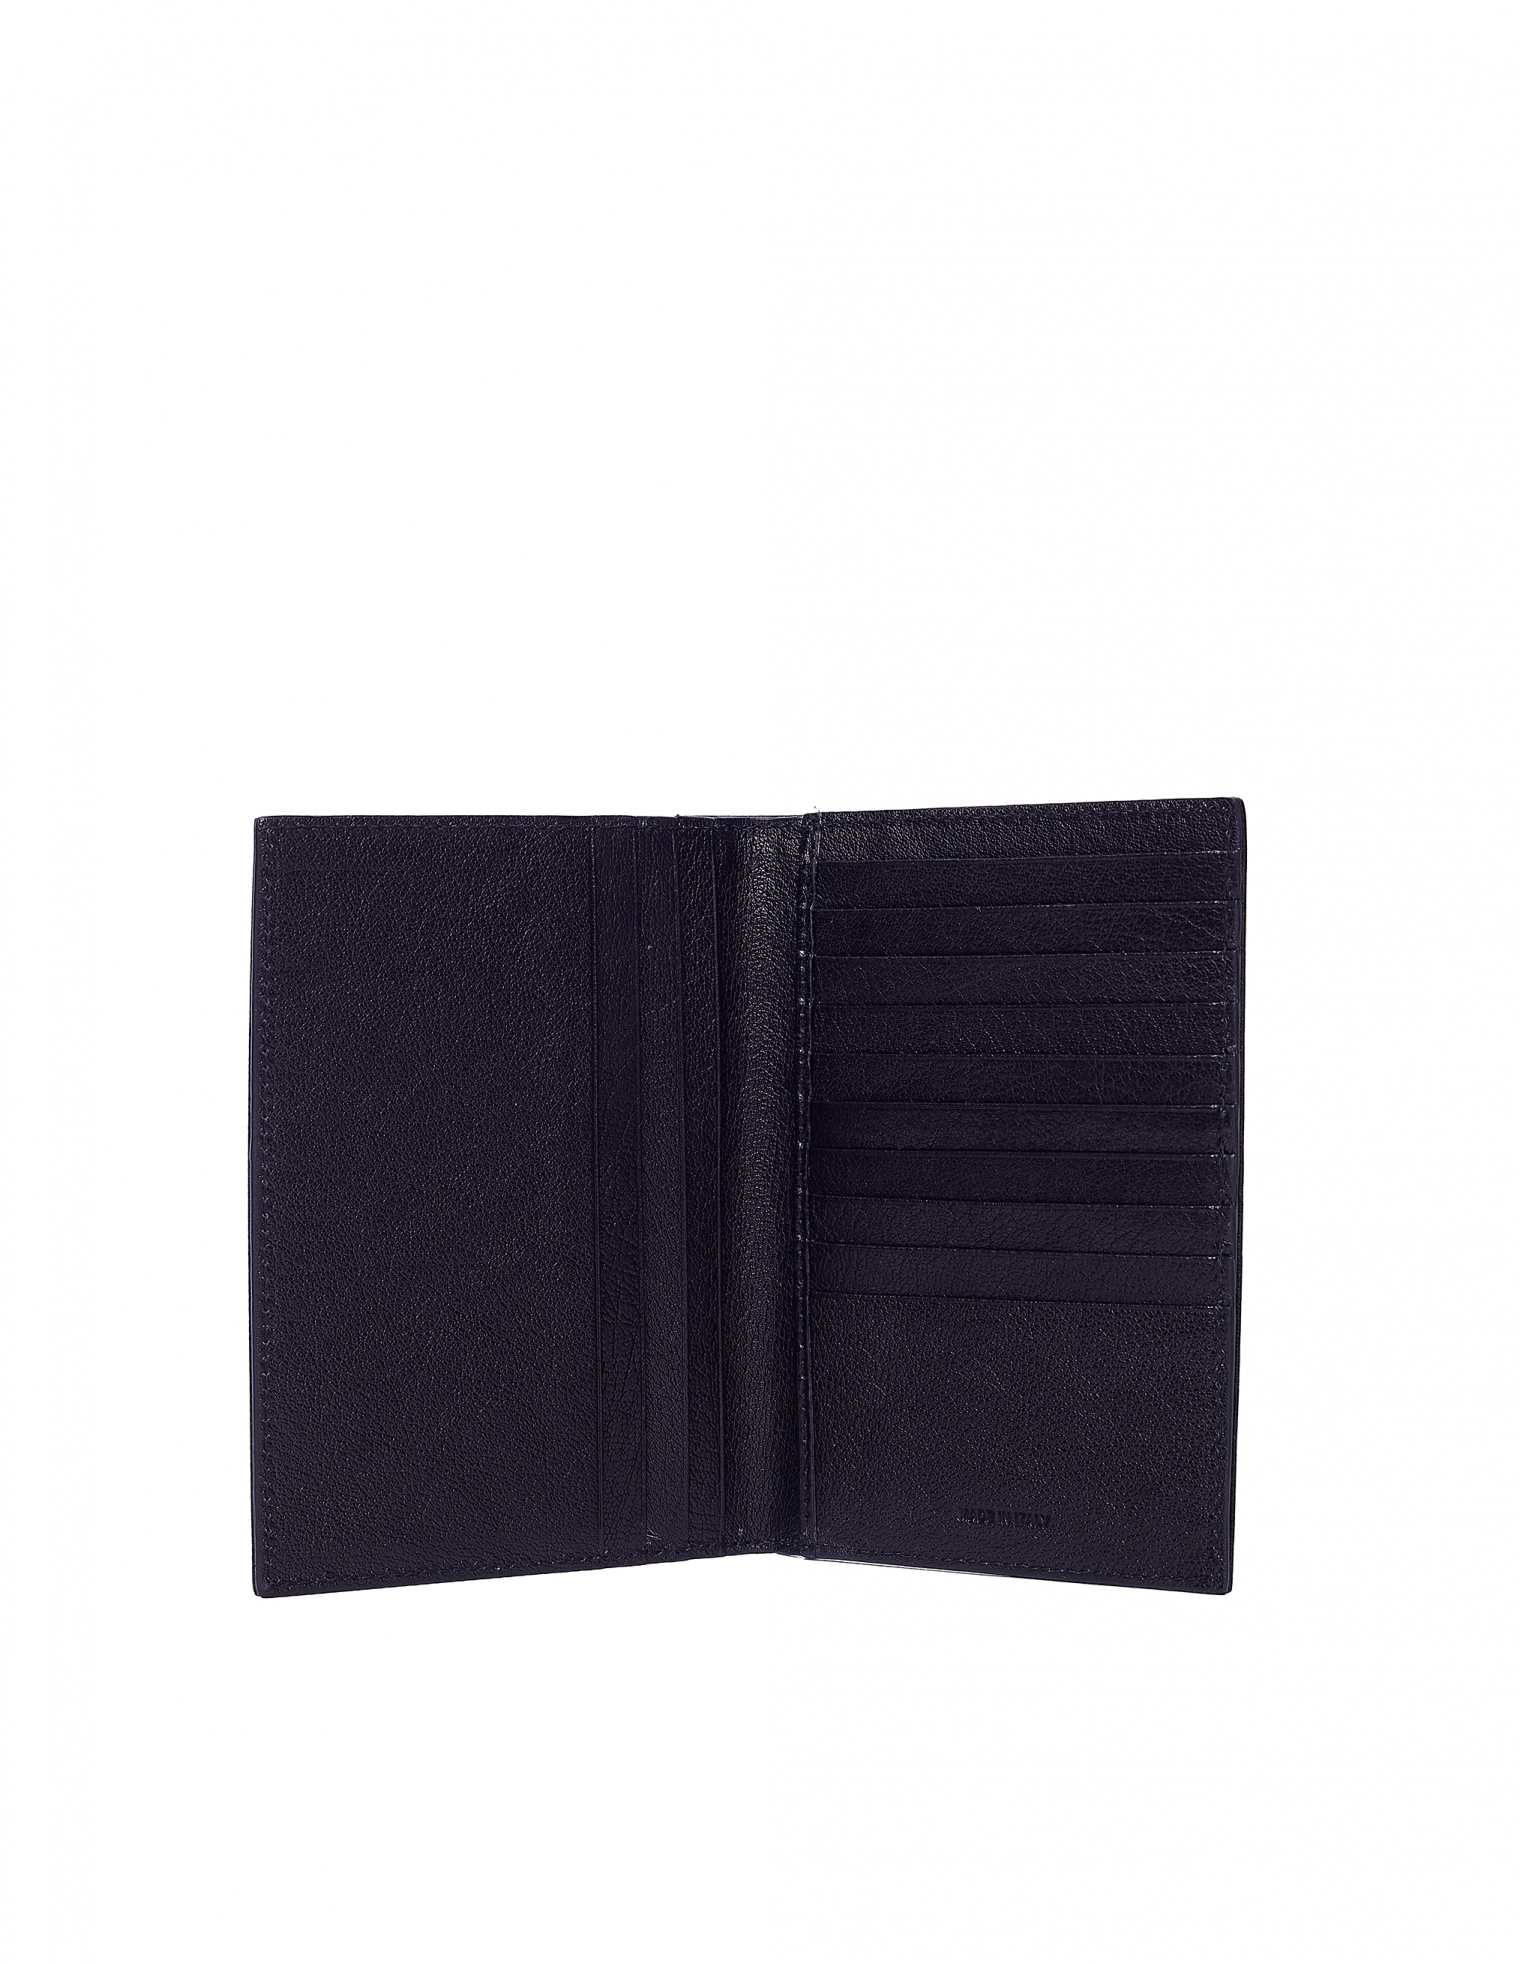 Ugo Cacciatori Black Leather Passport Wallet